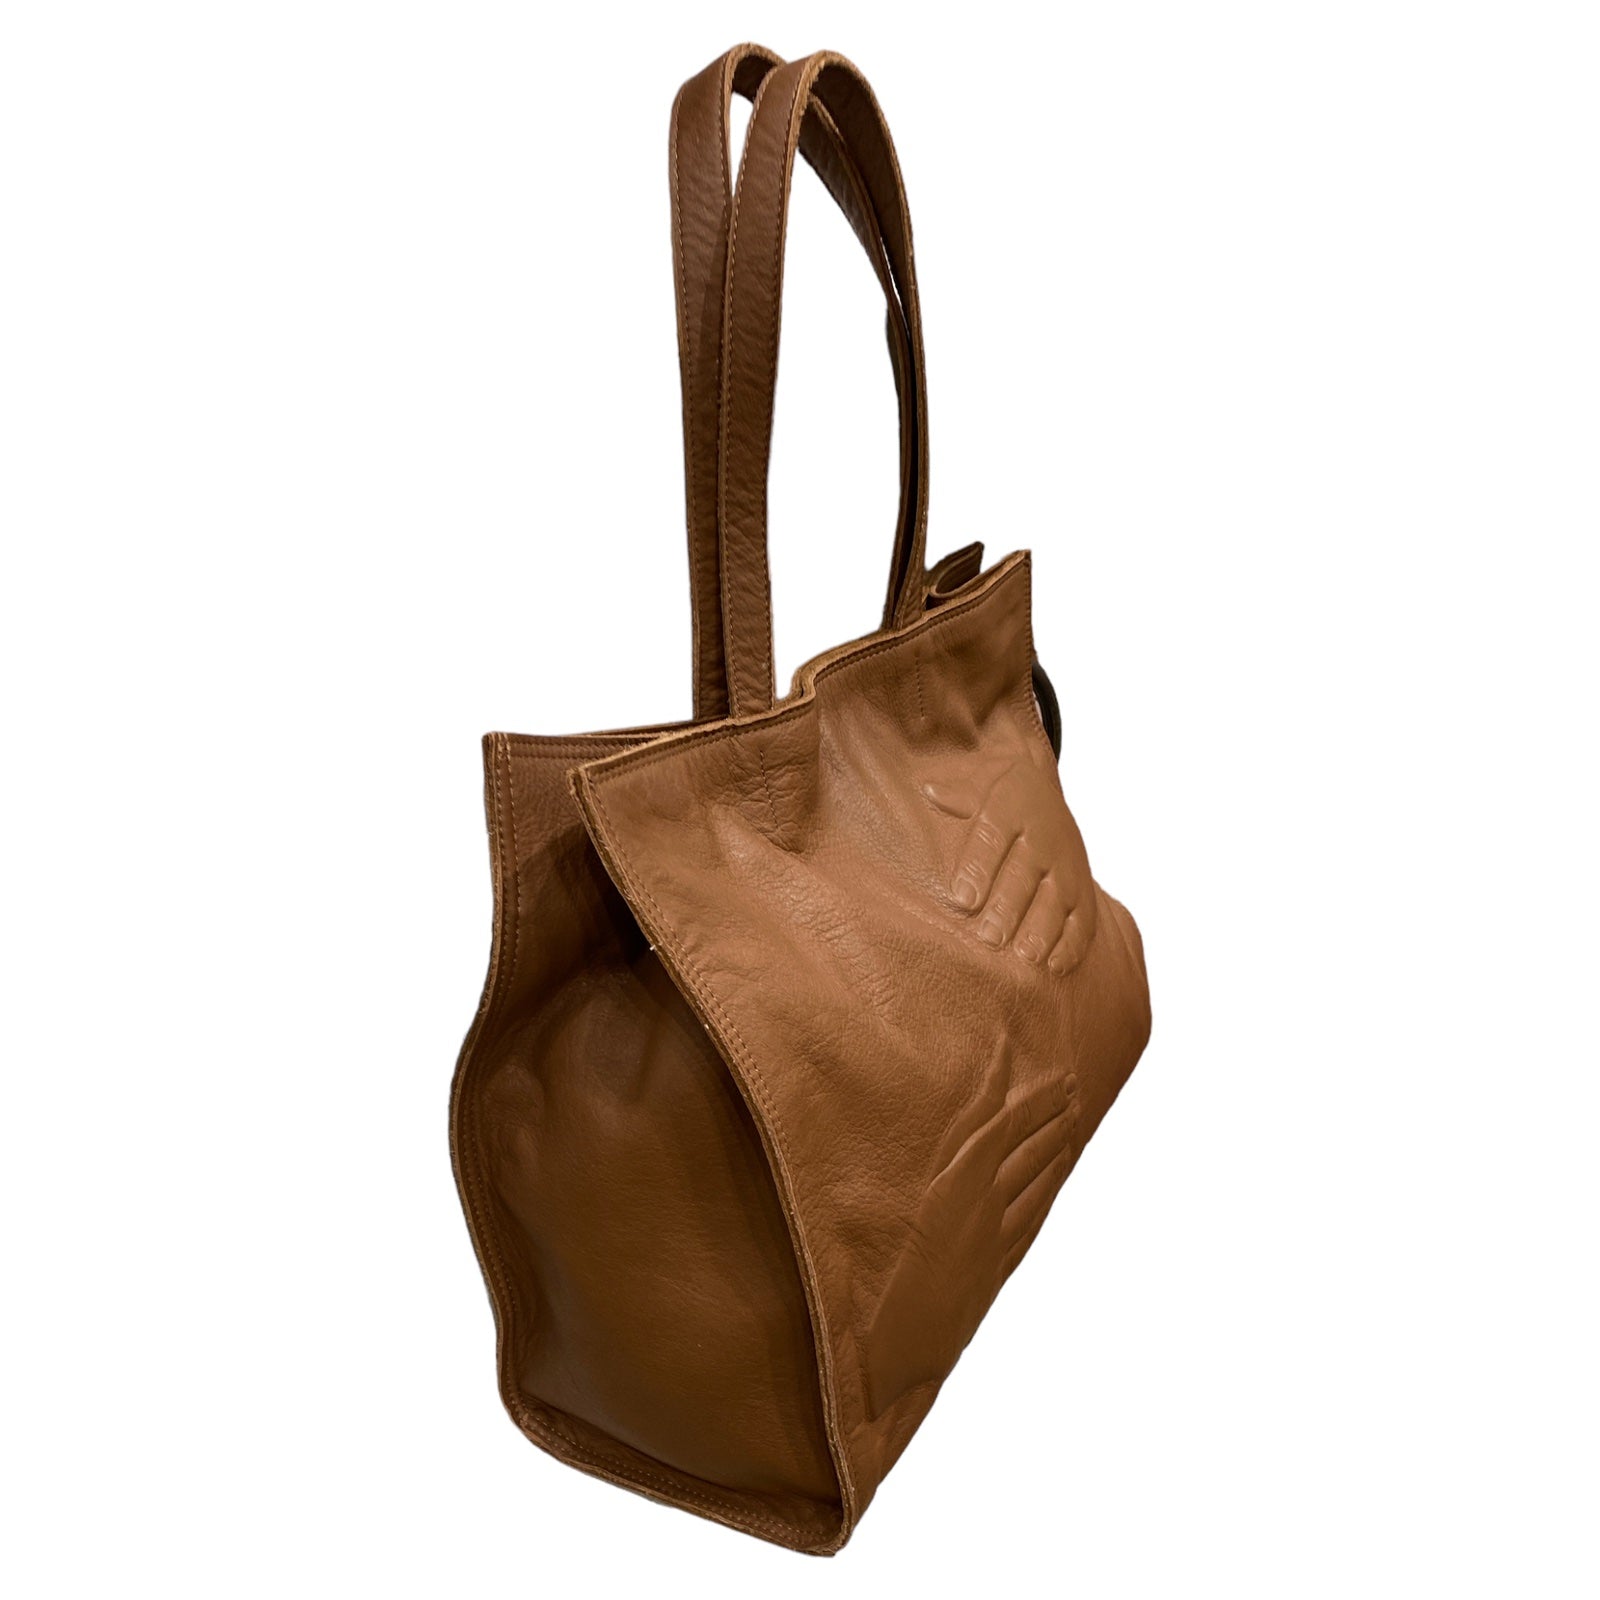 Taba leather shoulder bag with hands